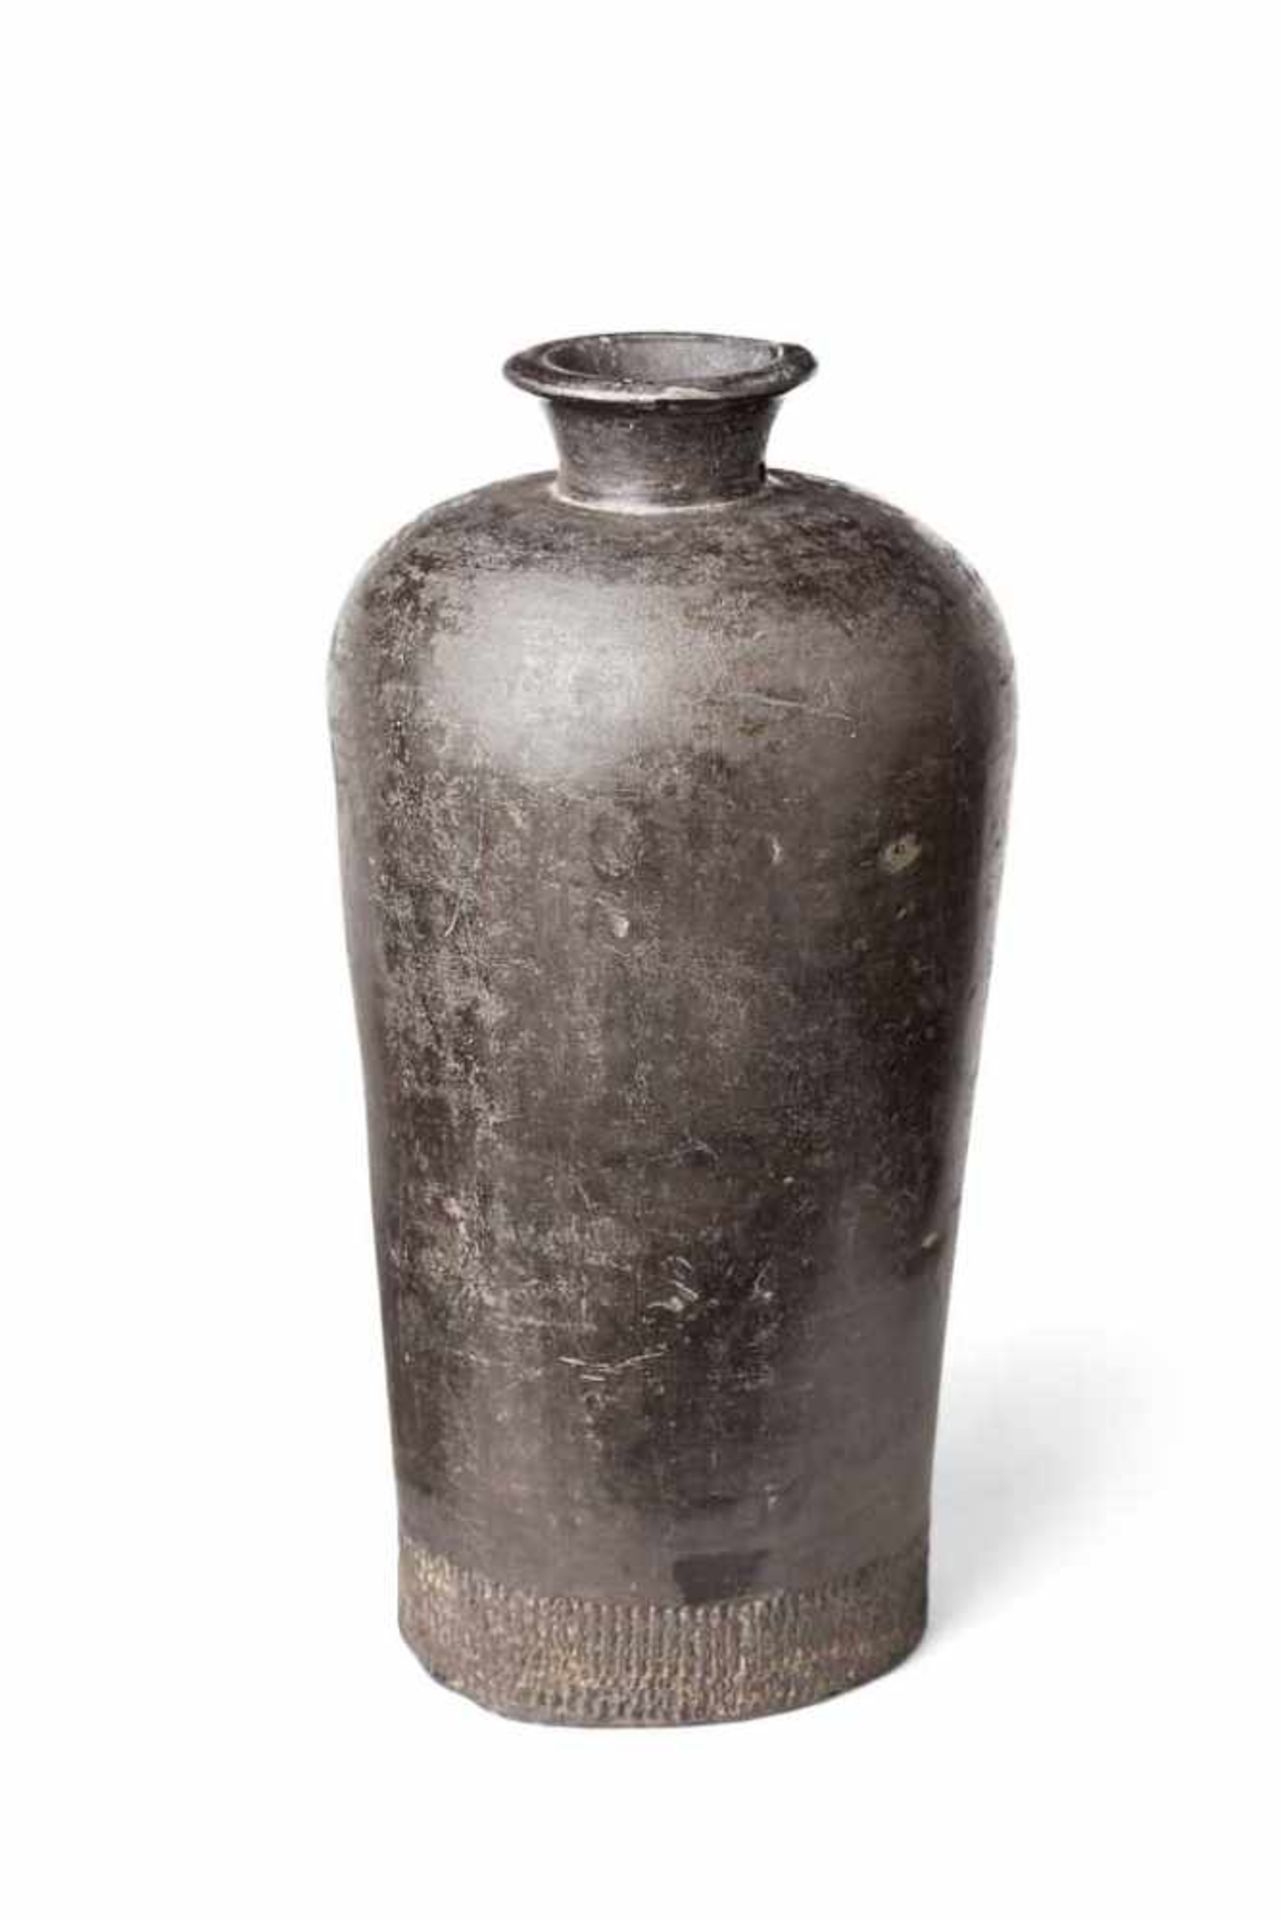 Hohe Vase mit engem Hals. Grau glasierte Keramik. Am Fuß Relieffries. China, Sung-Yuan, 13.-14.